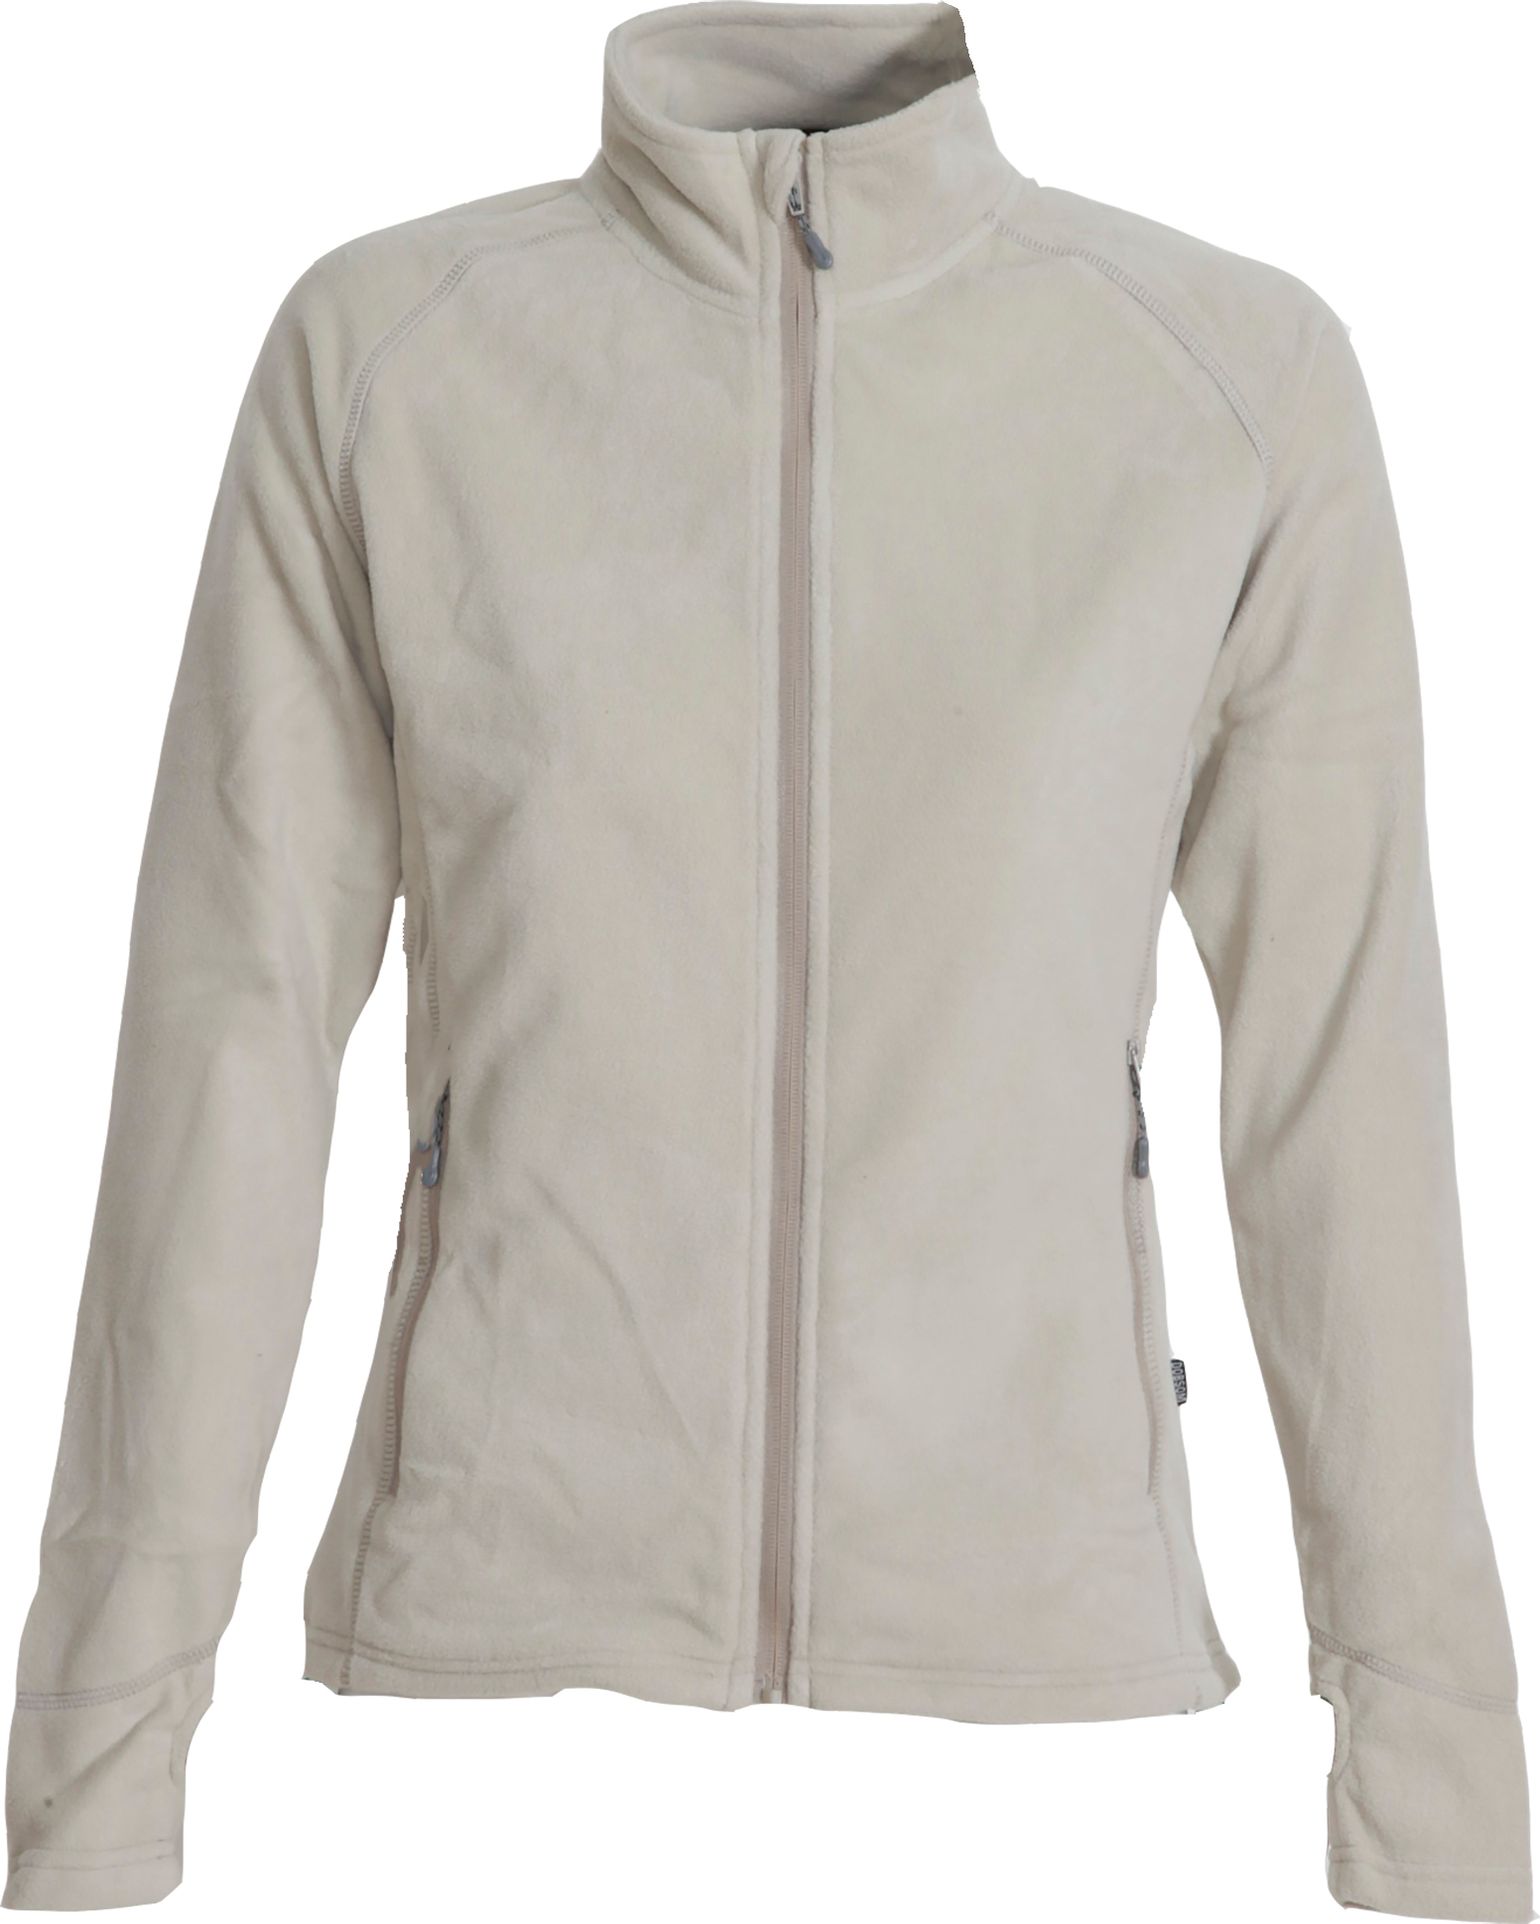 Women's Pescara Fleece Jacket Khaki